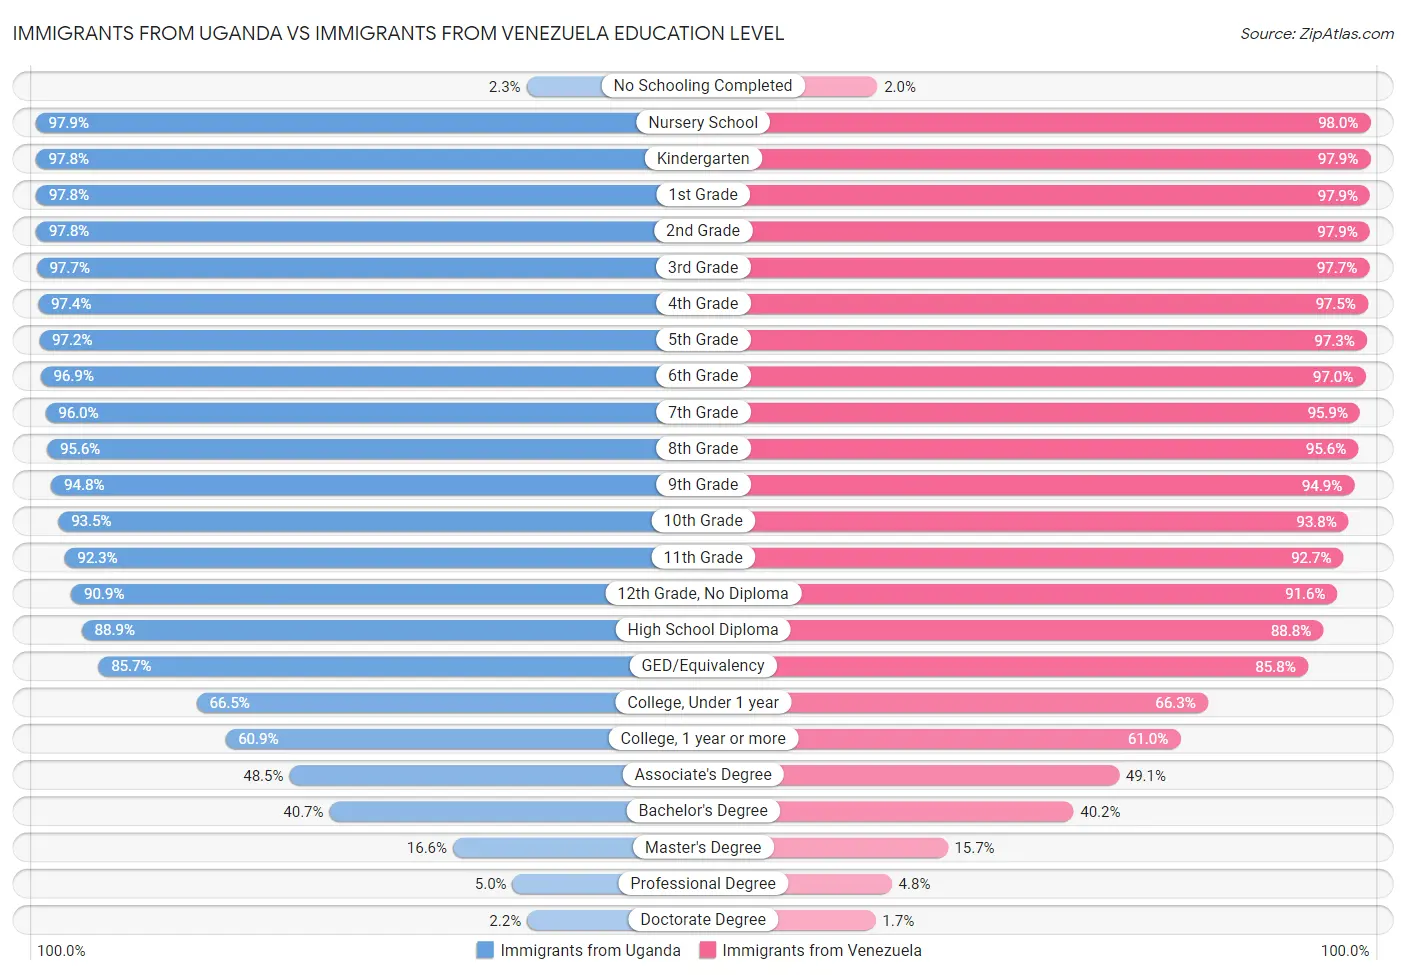 Immigrants from Uganda vs Immigrants from Venezuela Education Level